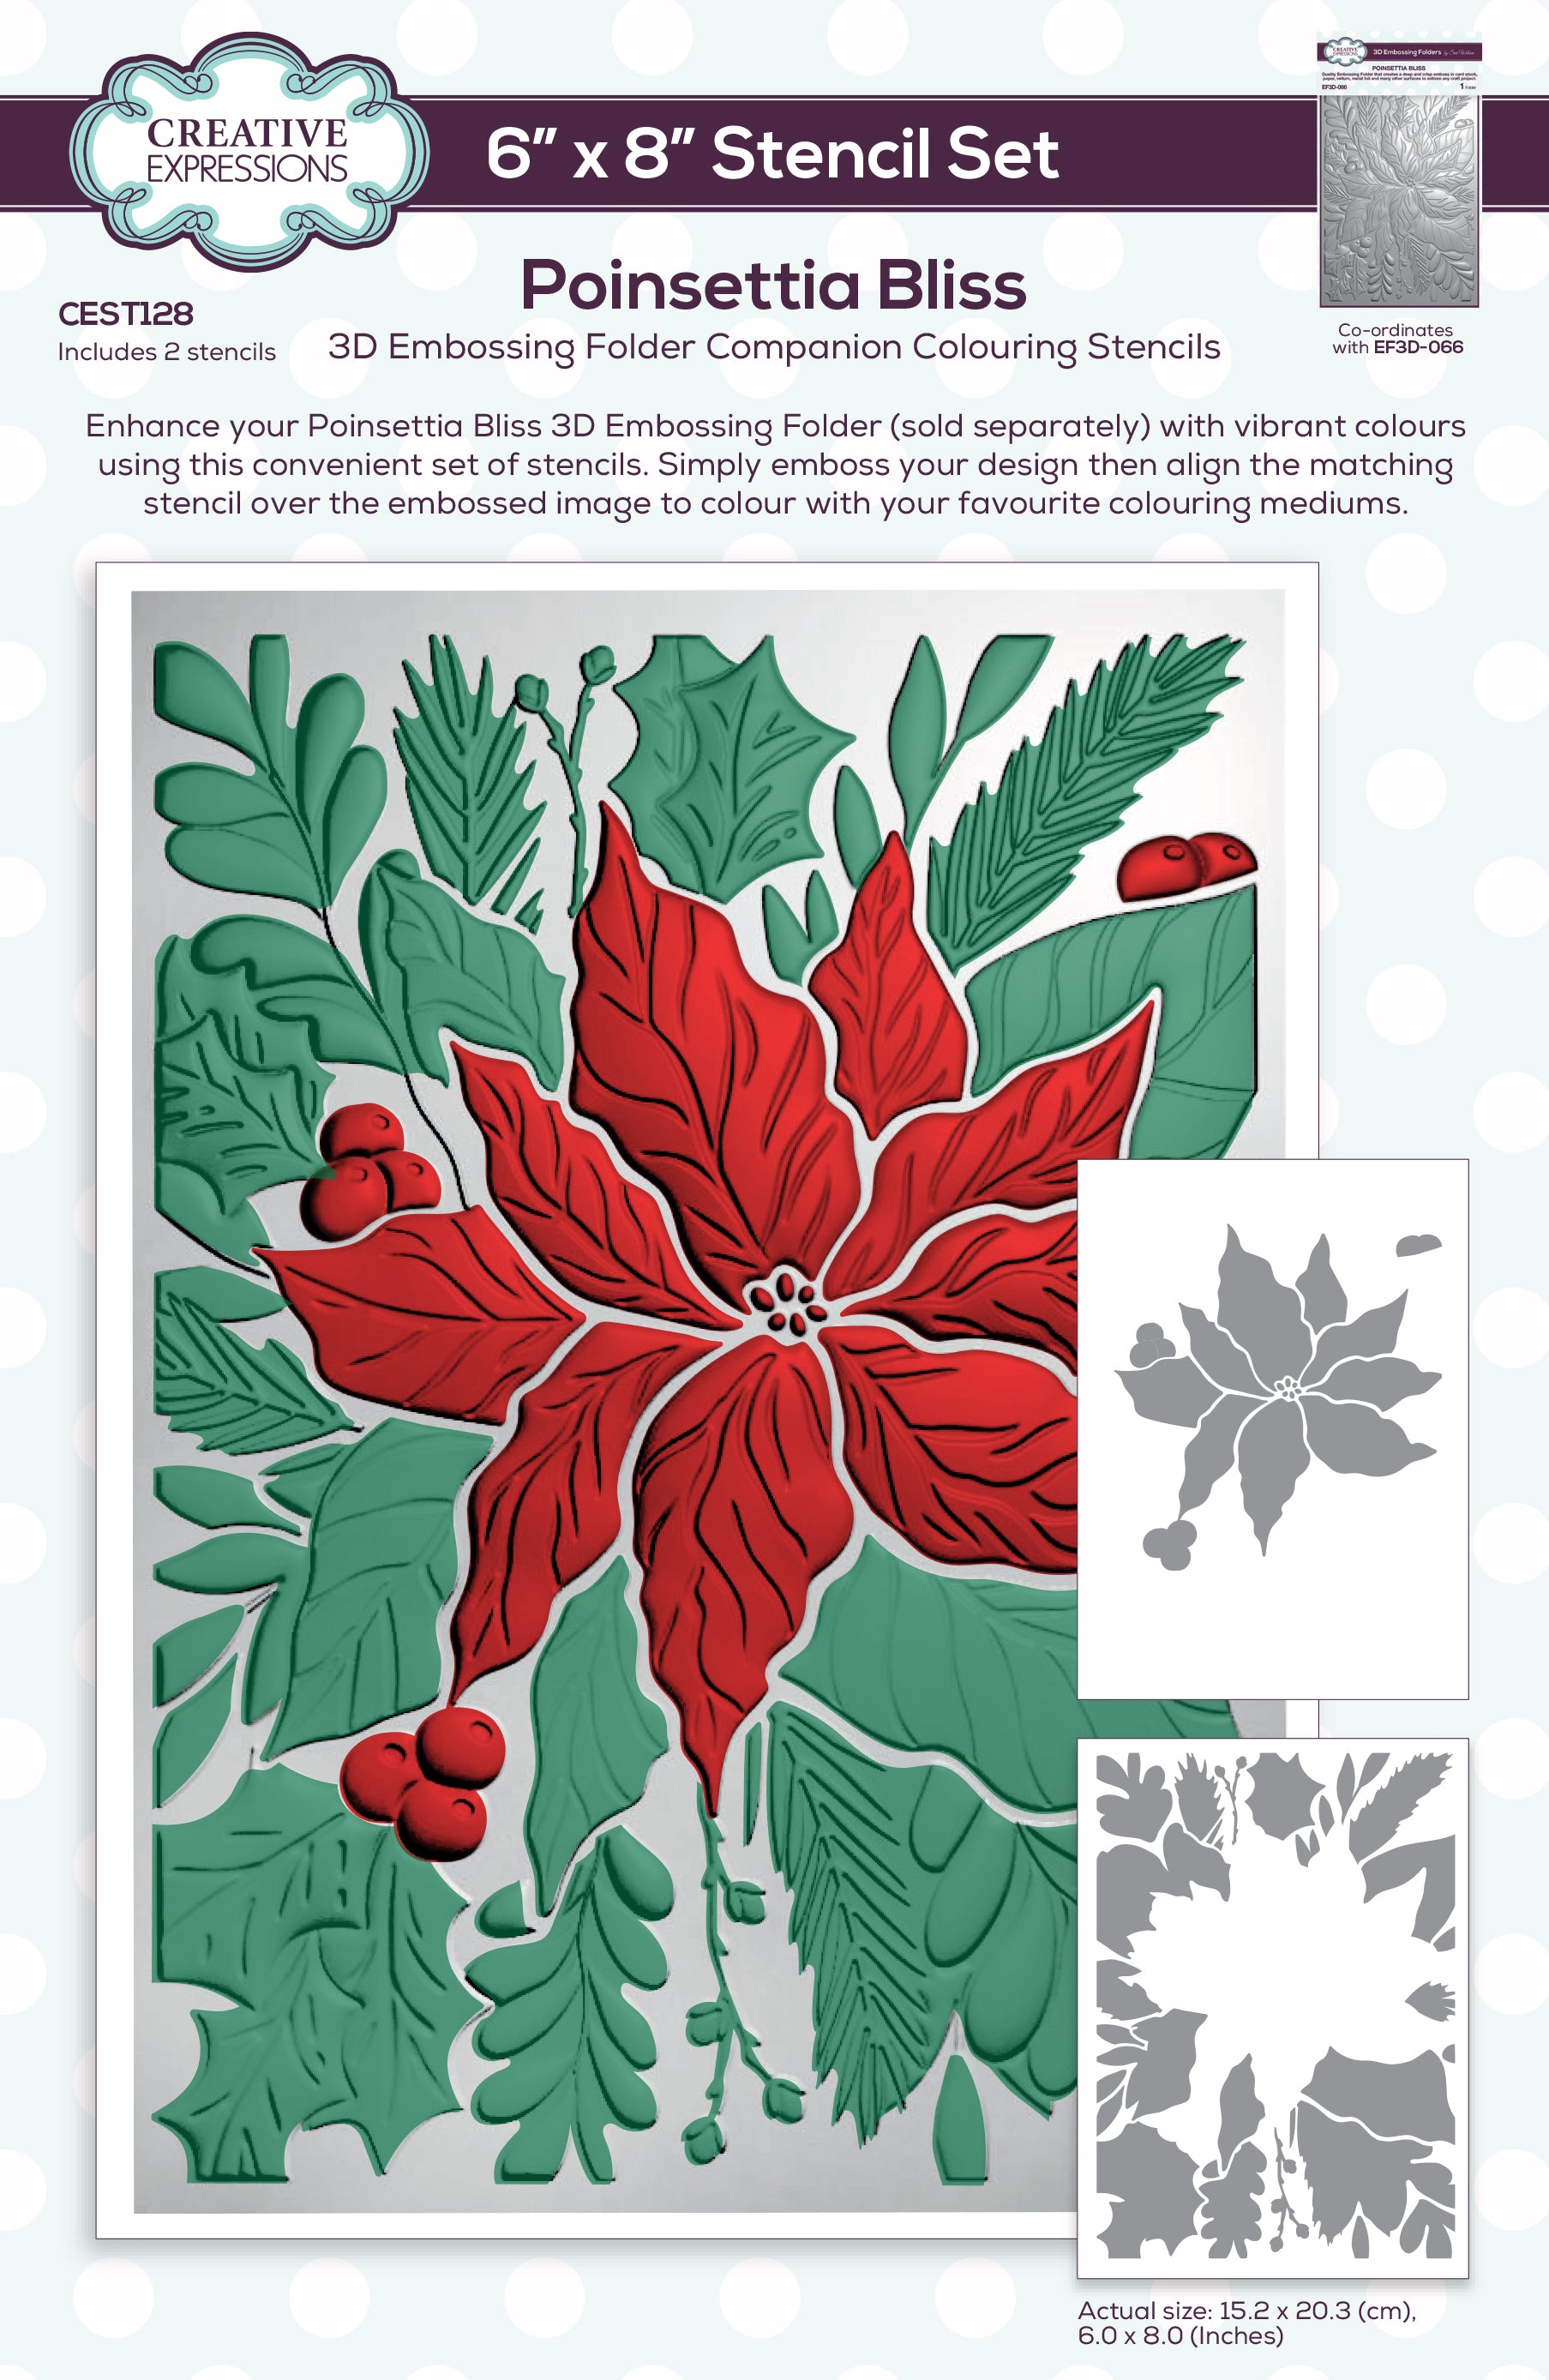 Creative Expressions Poinsettia Bliss Companion Colouring Stencil Set 6 in x 8 in 2pk